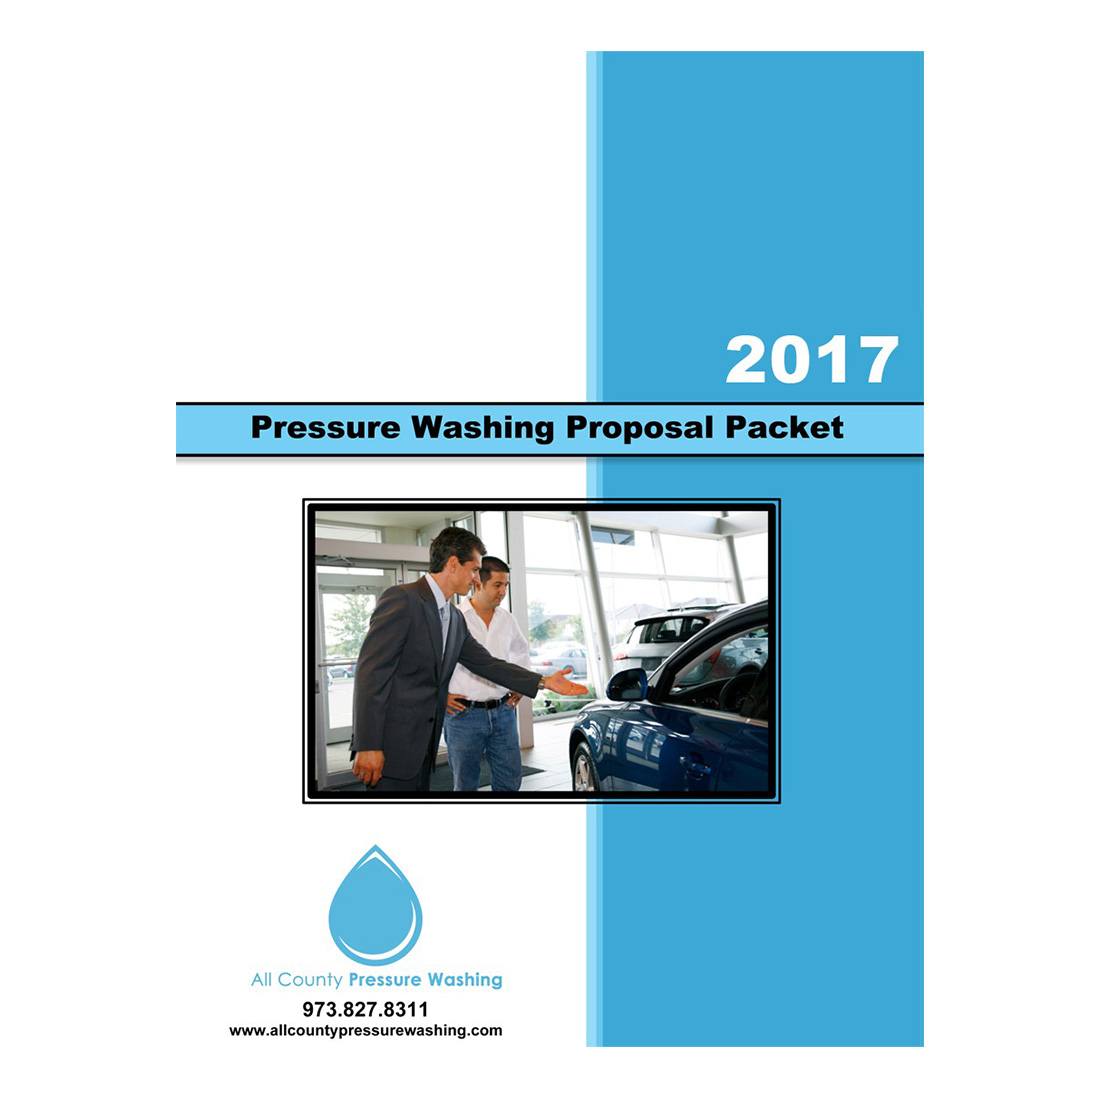 Car Dealership - Pressure Washing Proposal Packet - Front View